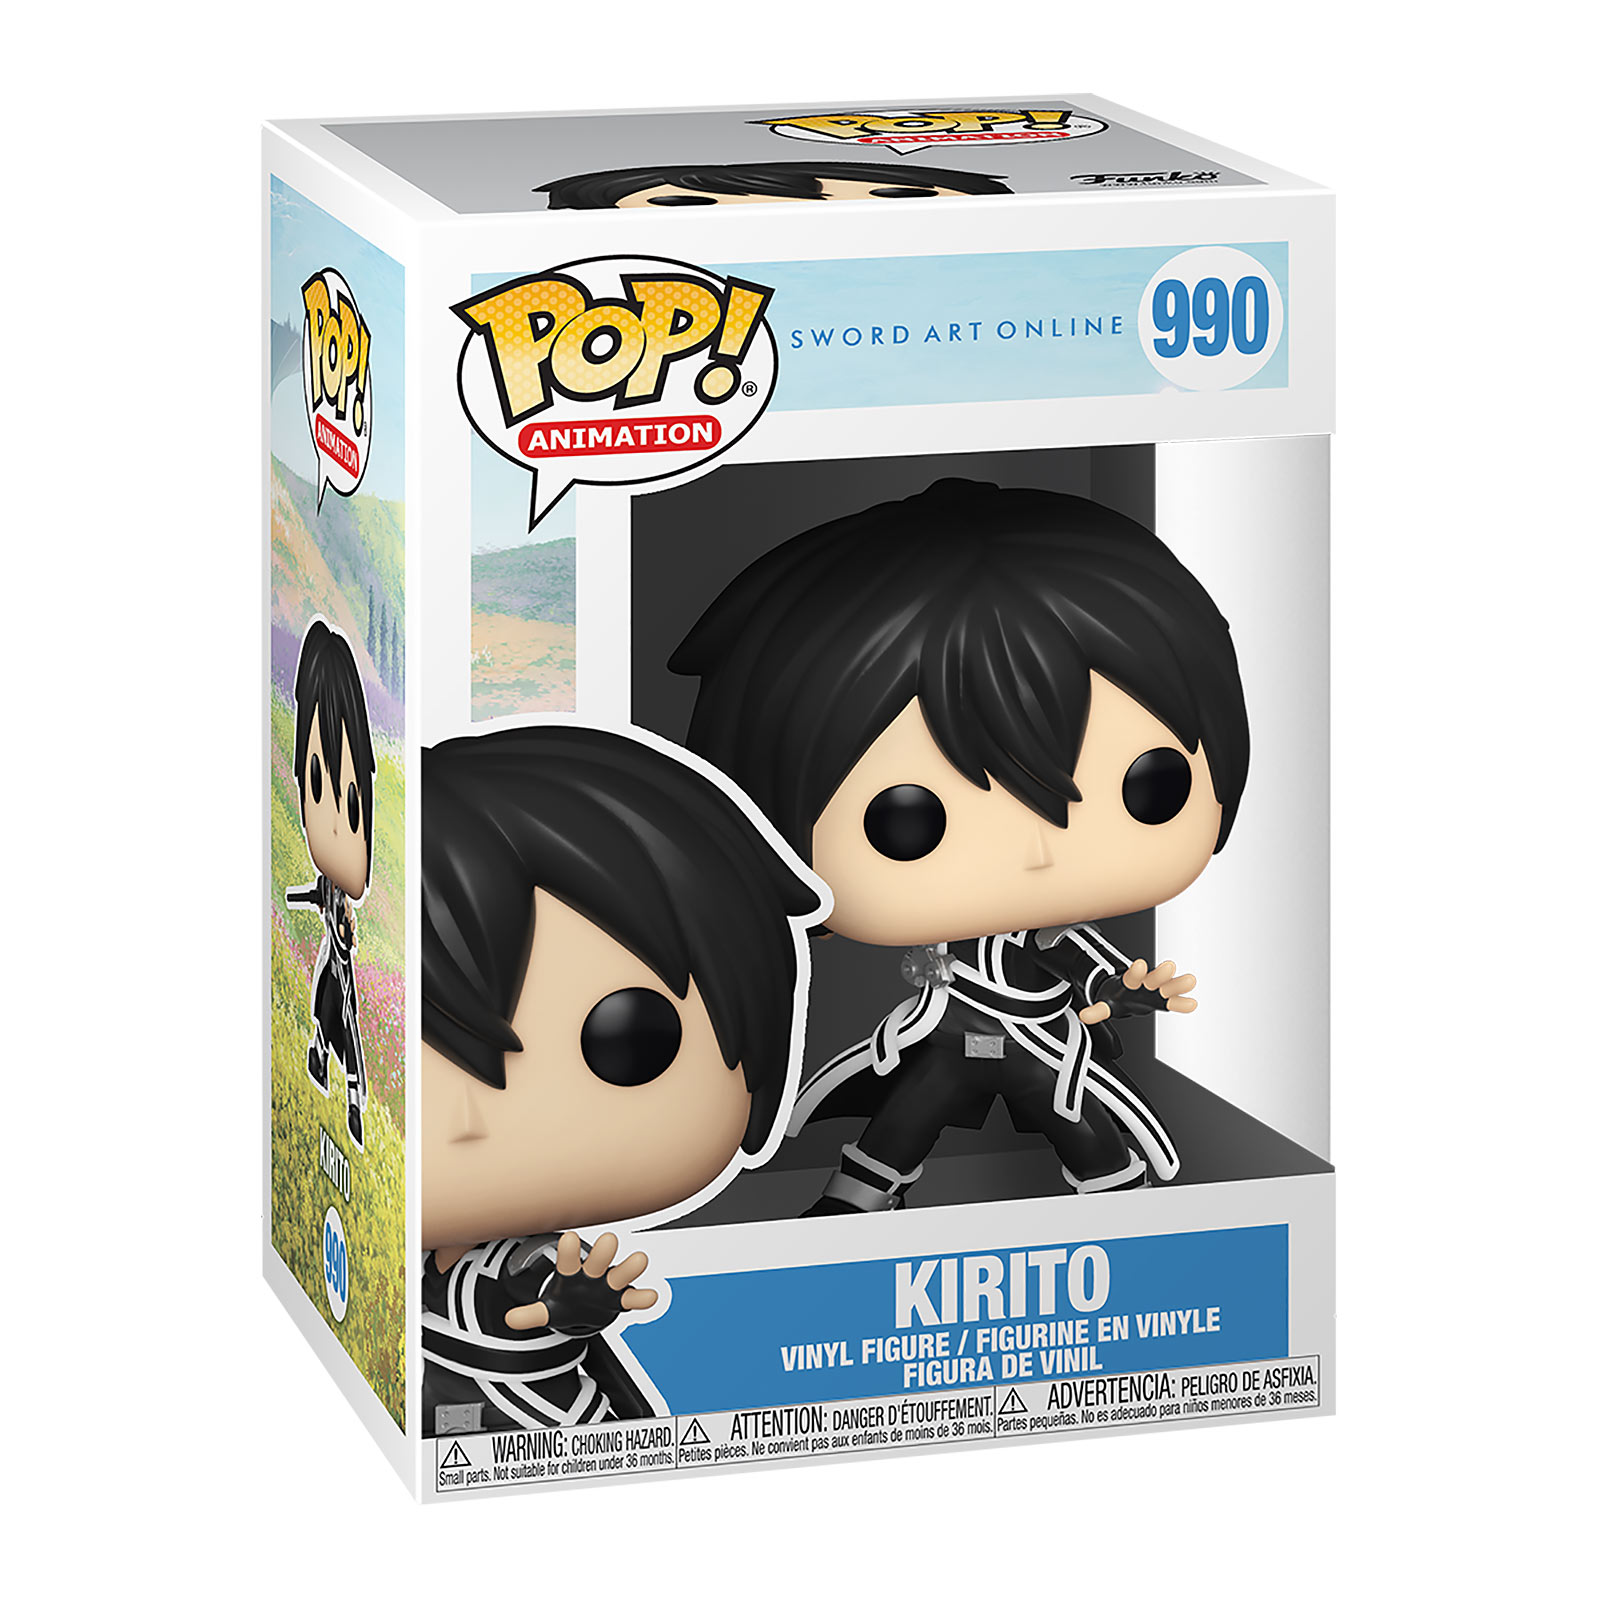 Sword Art Online - Kirito Funko Pop Figurine